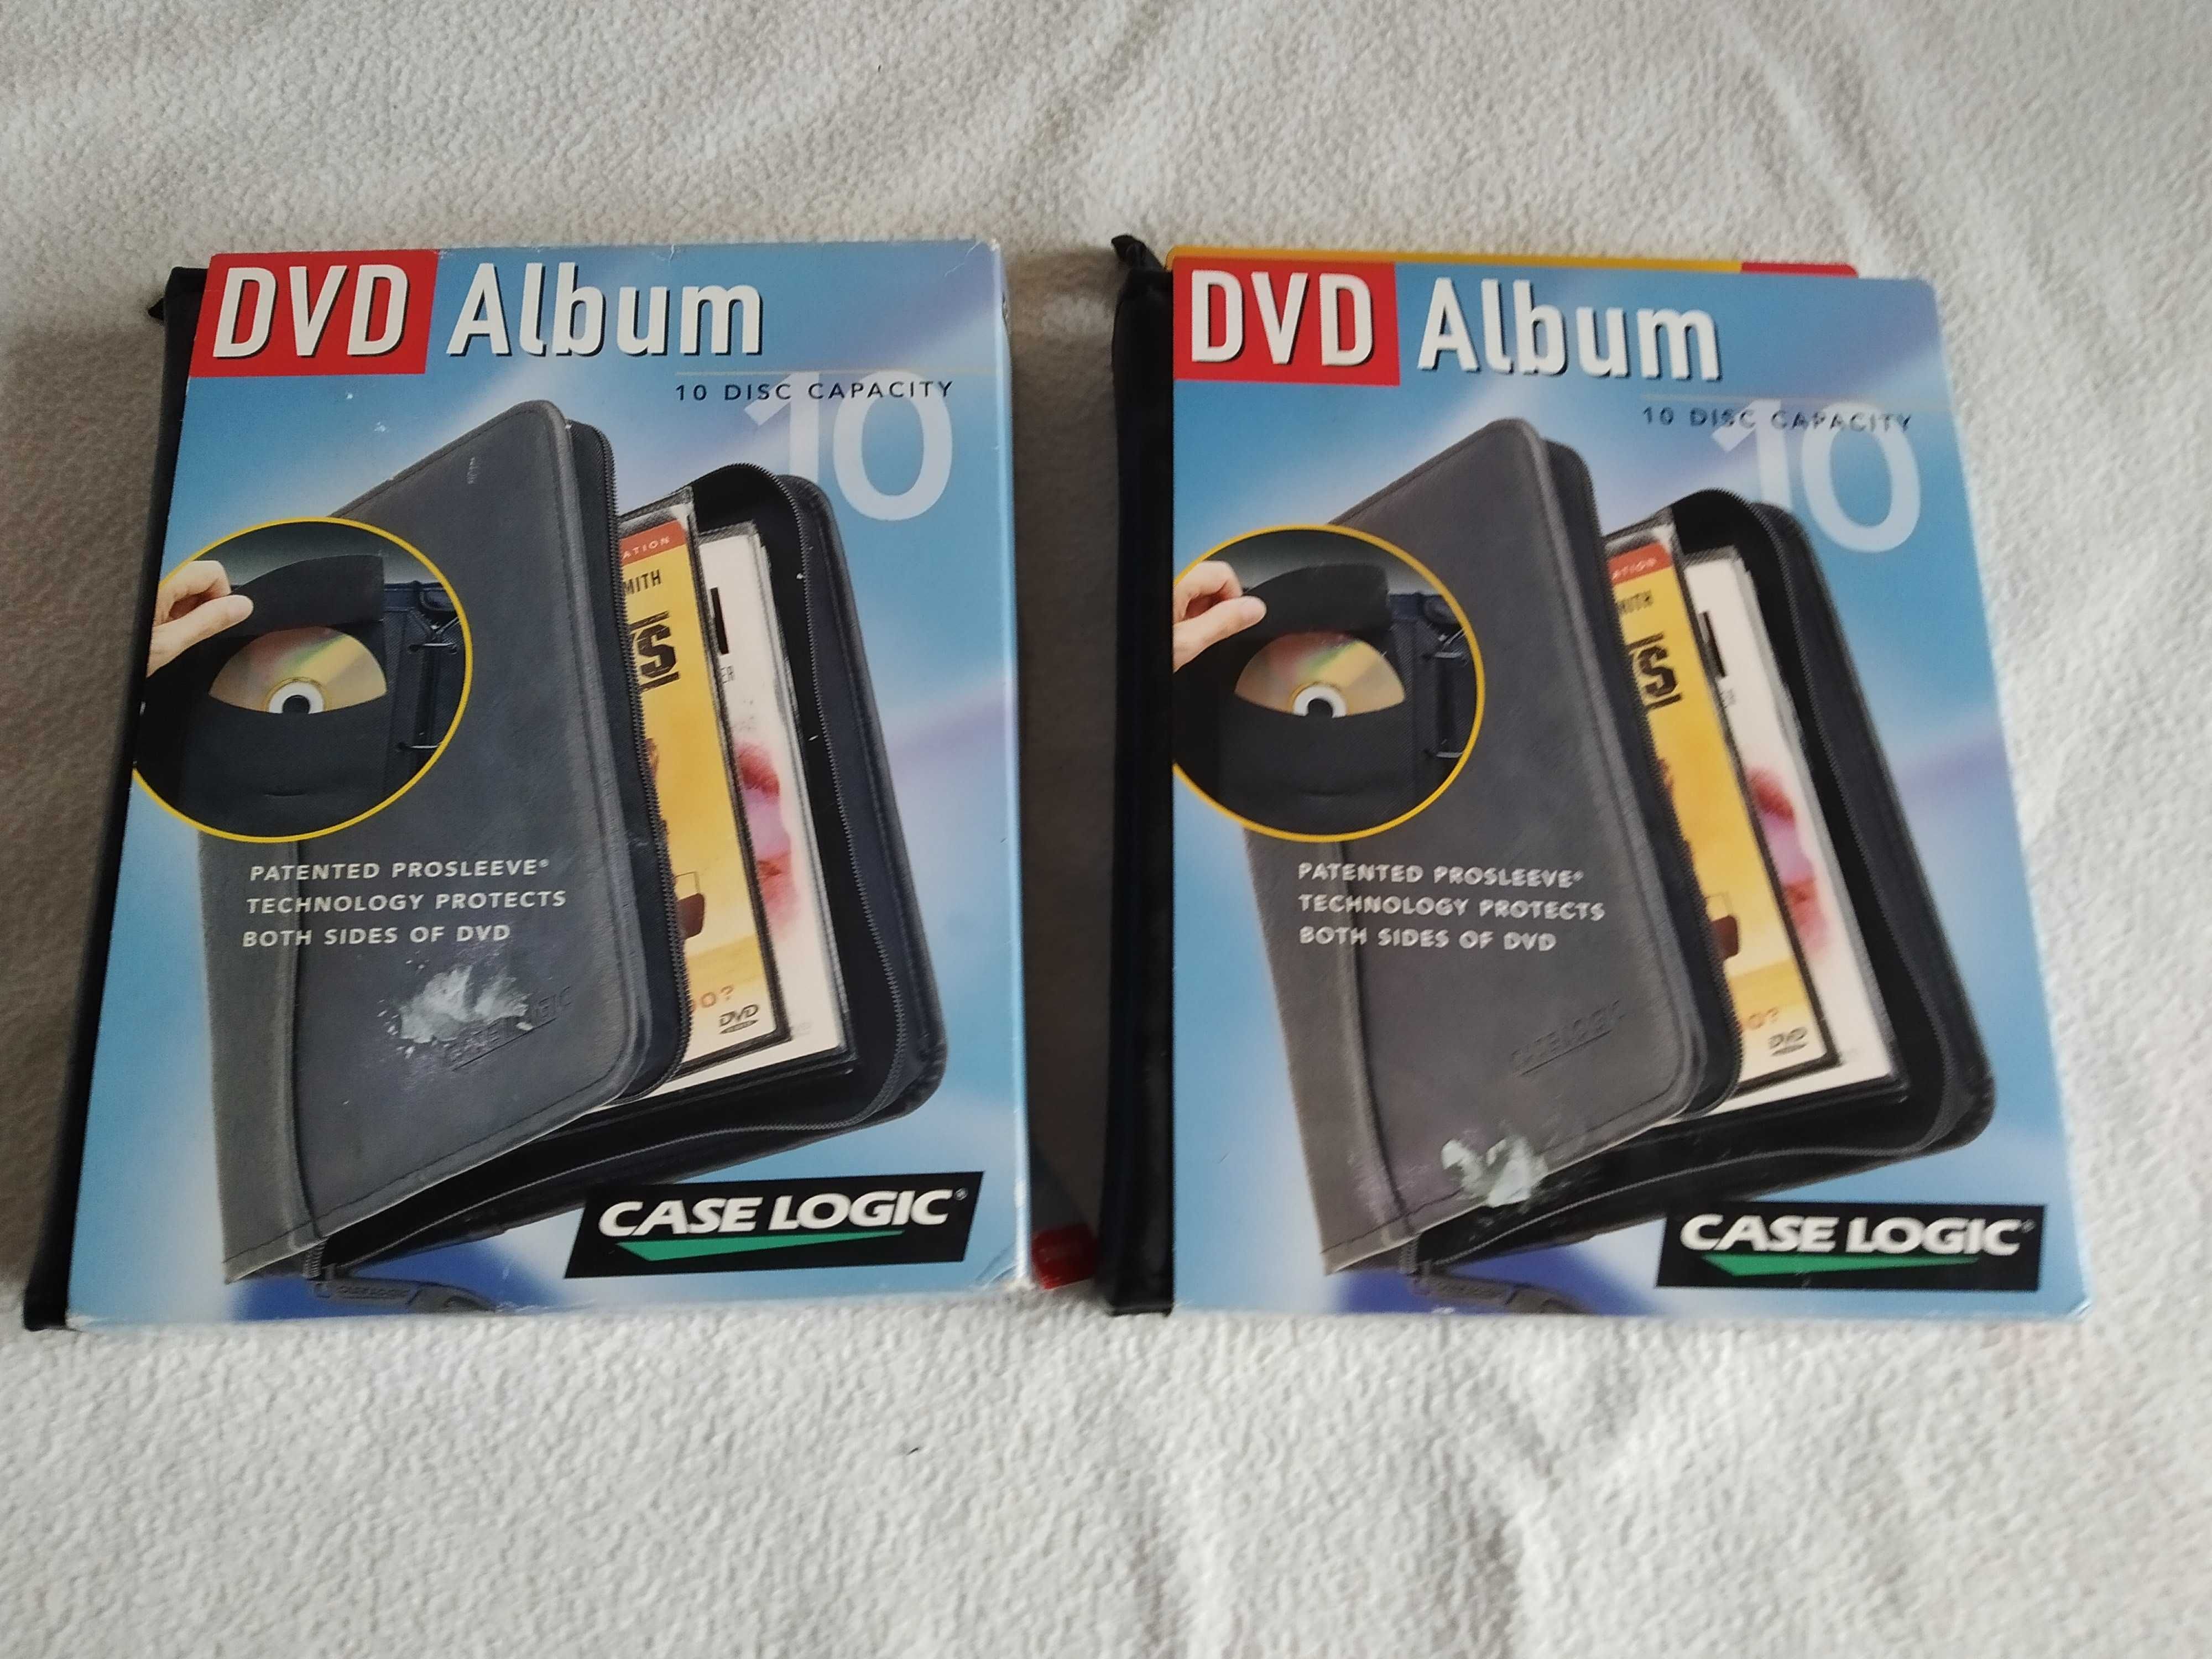 Etui na płyty CD/DVD – każde na 10 płyt. Cena za oba etui